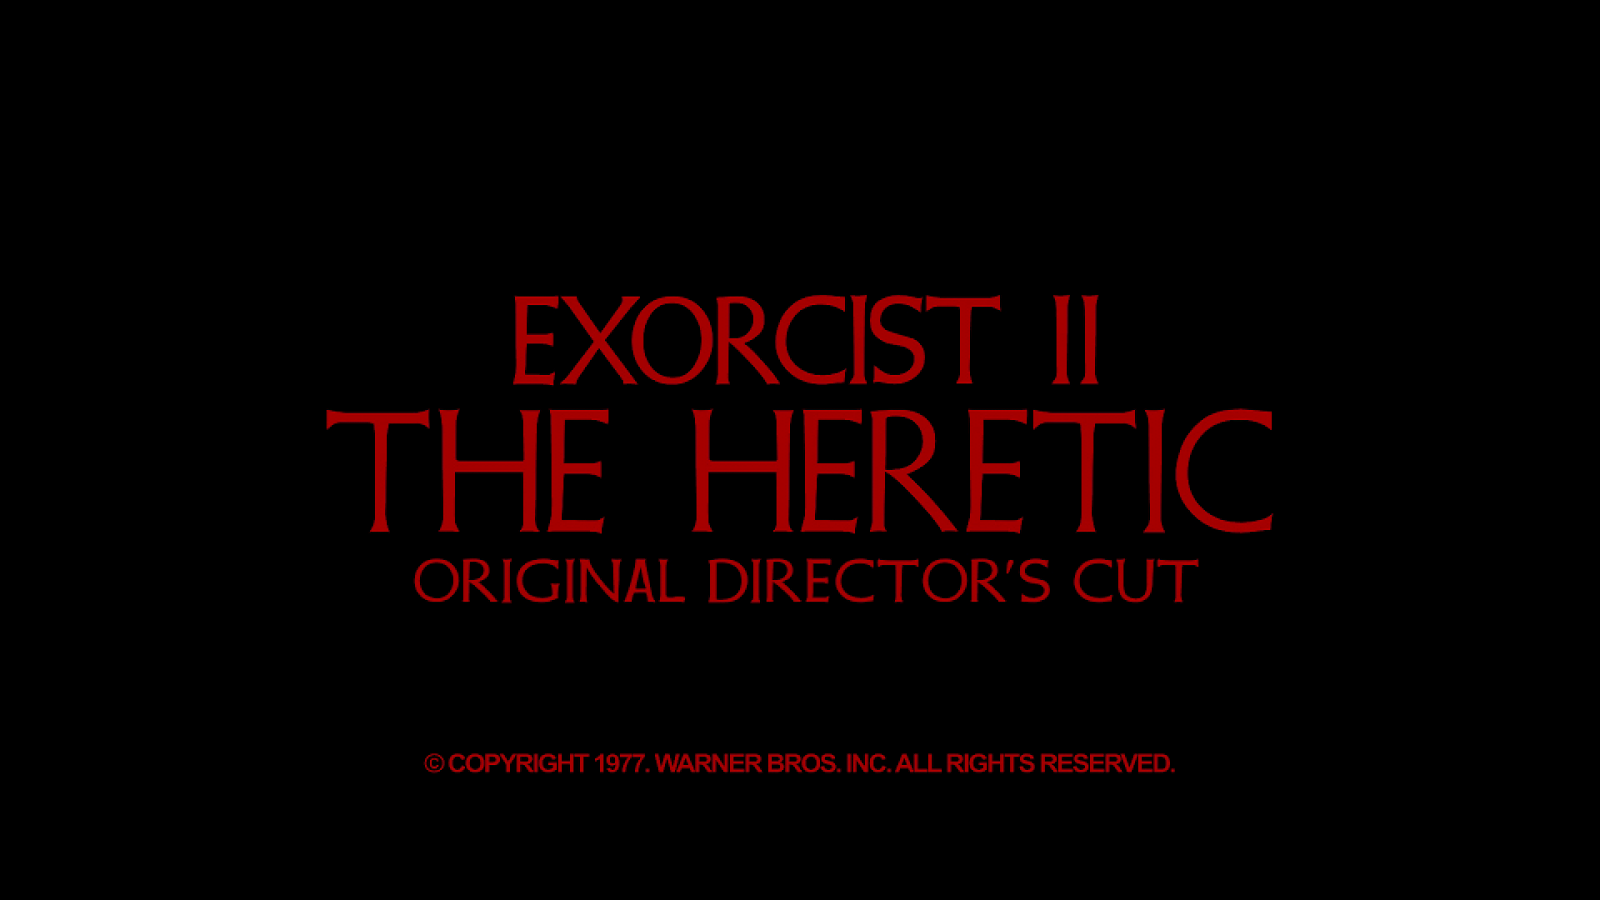 the exorcist directors cut 720p 32